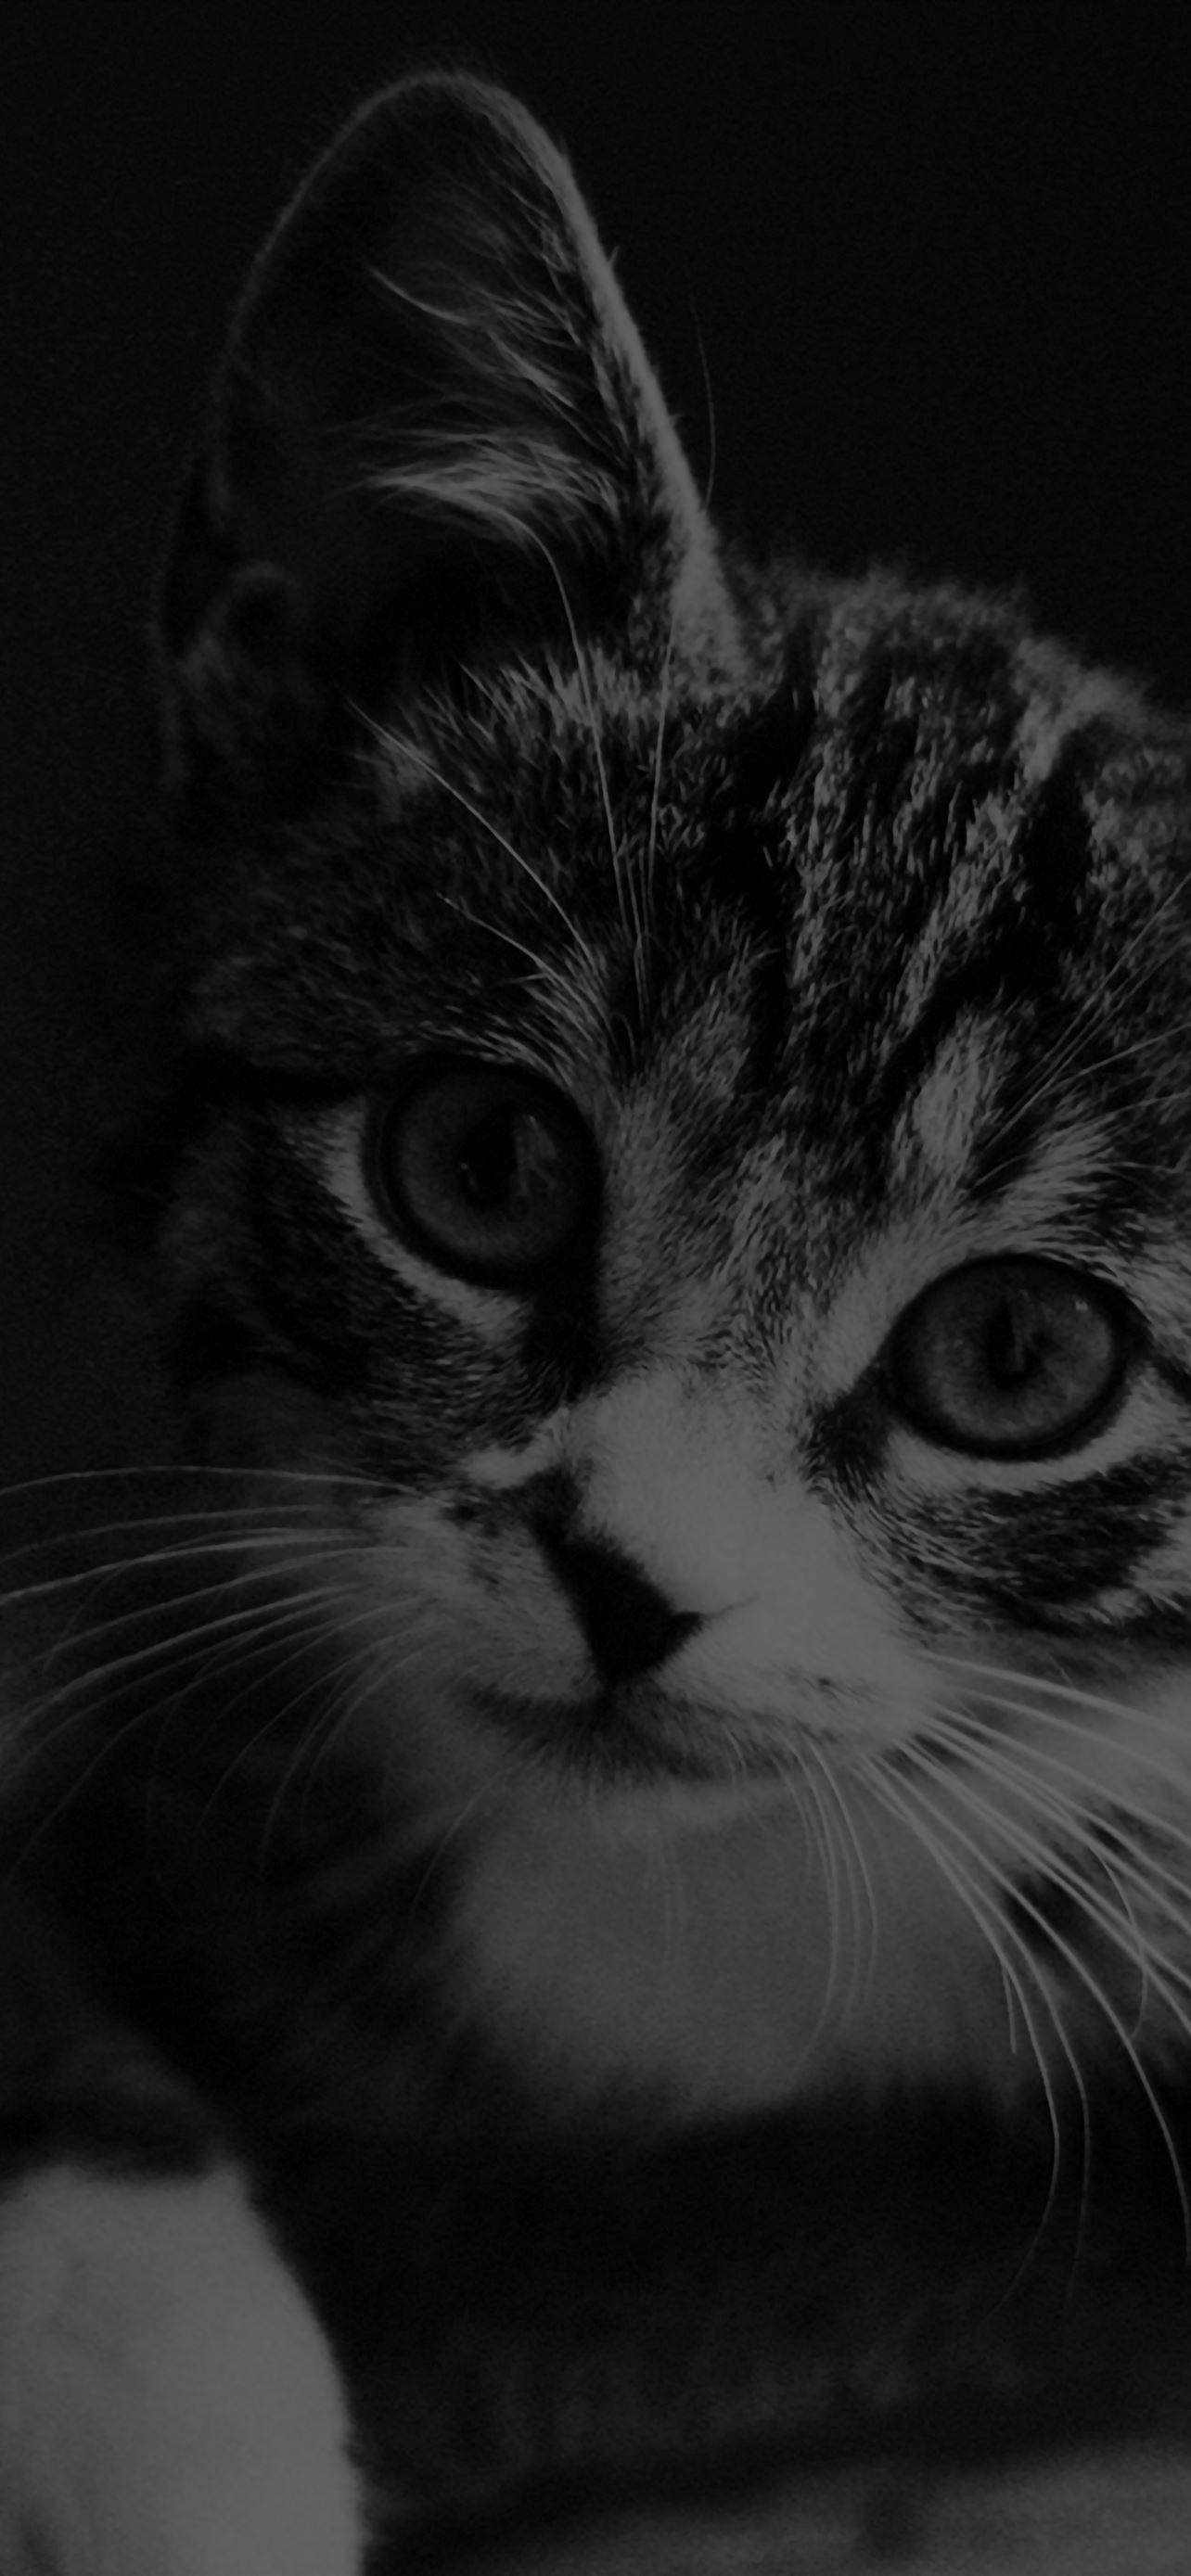 Cute Cat Look Dark Bw Animal Love Nature iPhone Wallpapers Free Download